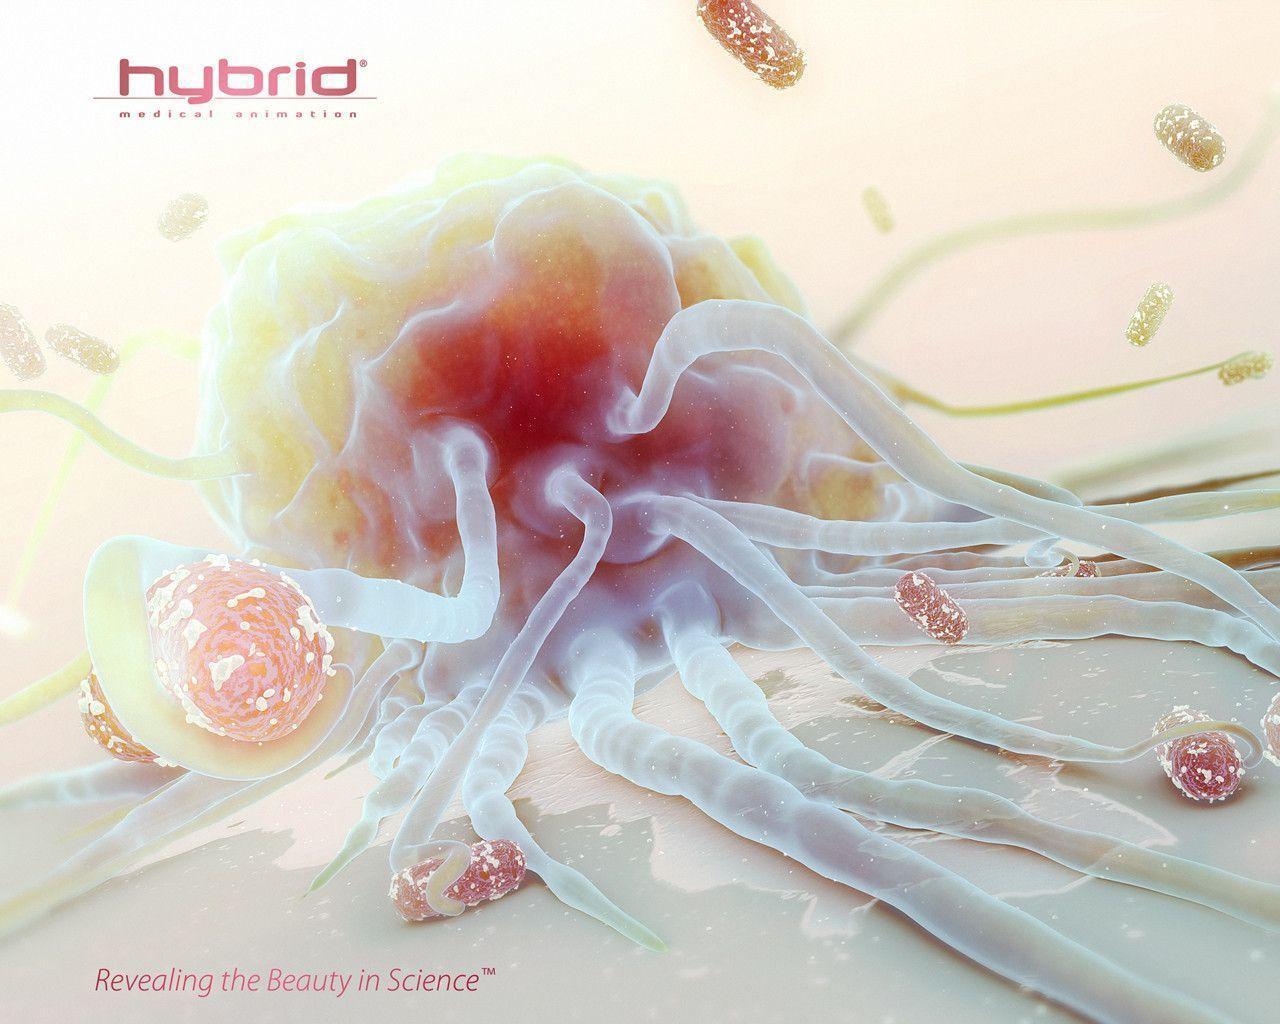 Hybrid Medical Animation Desktop Wallpaper